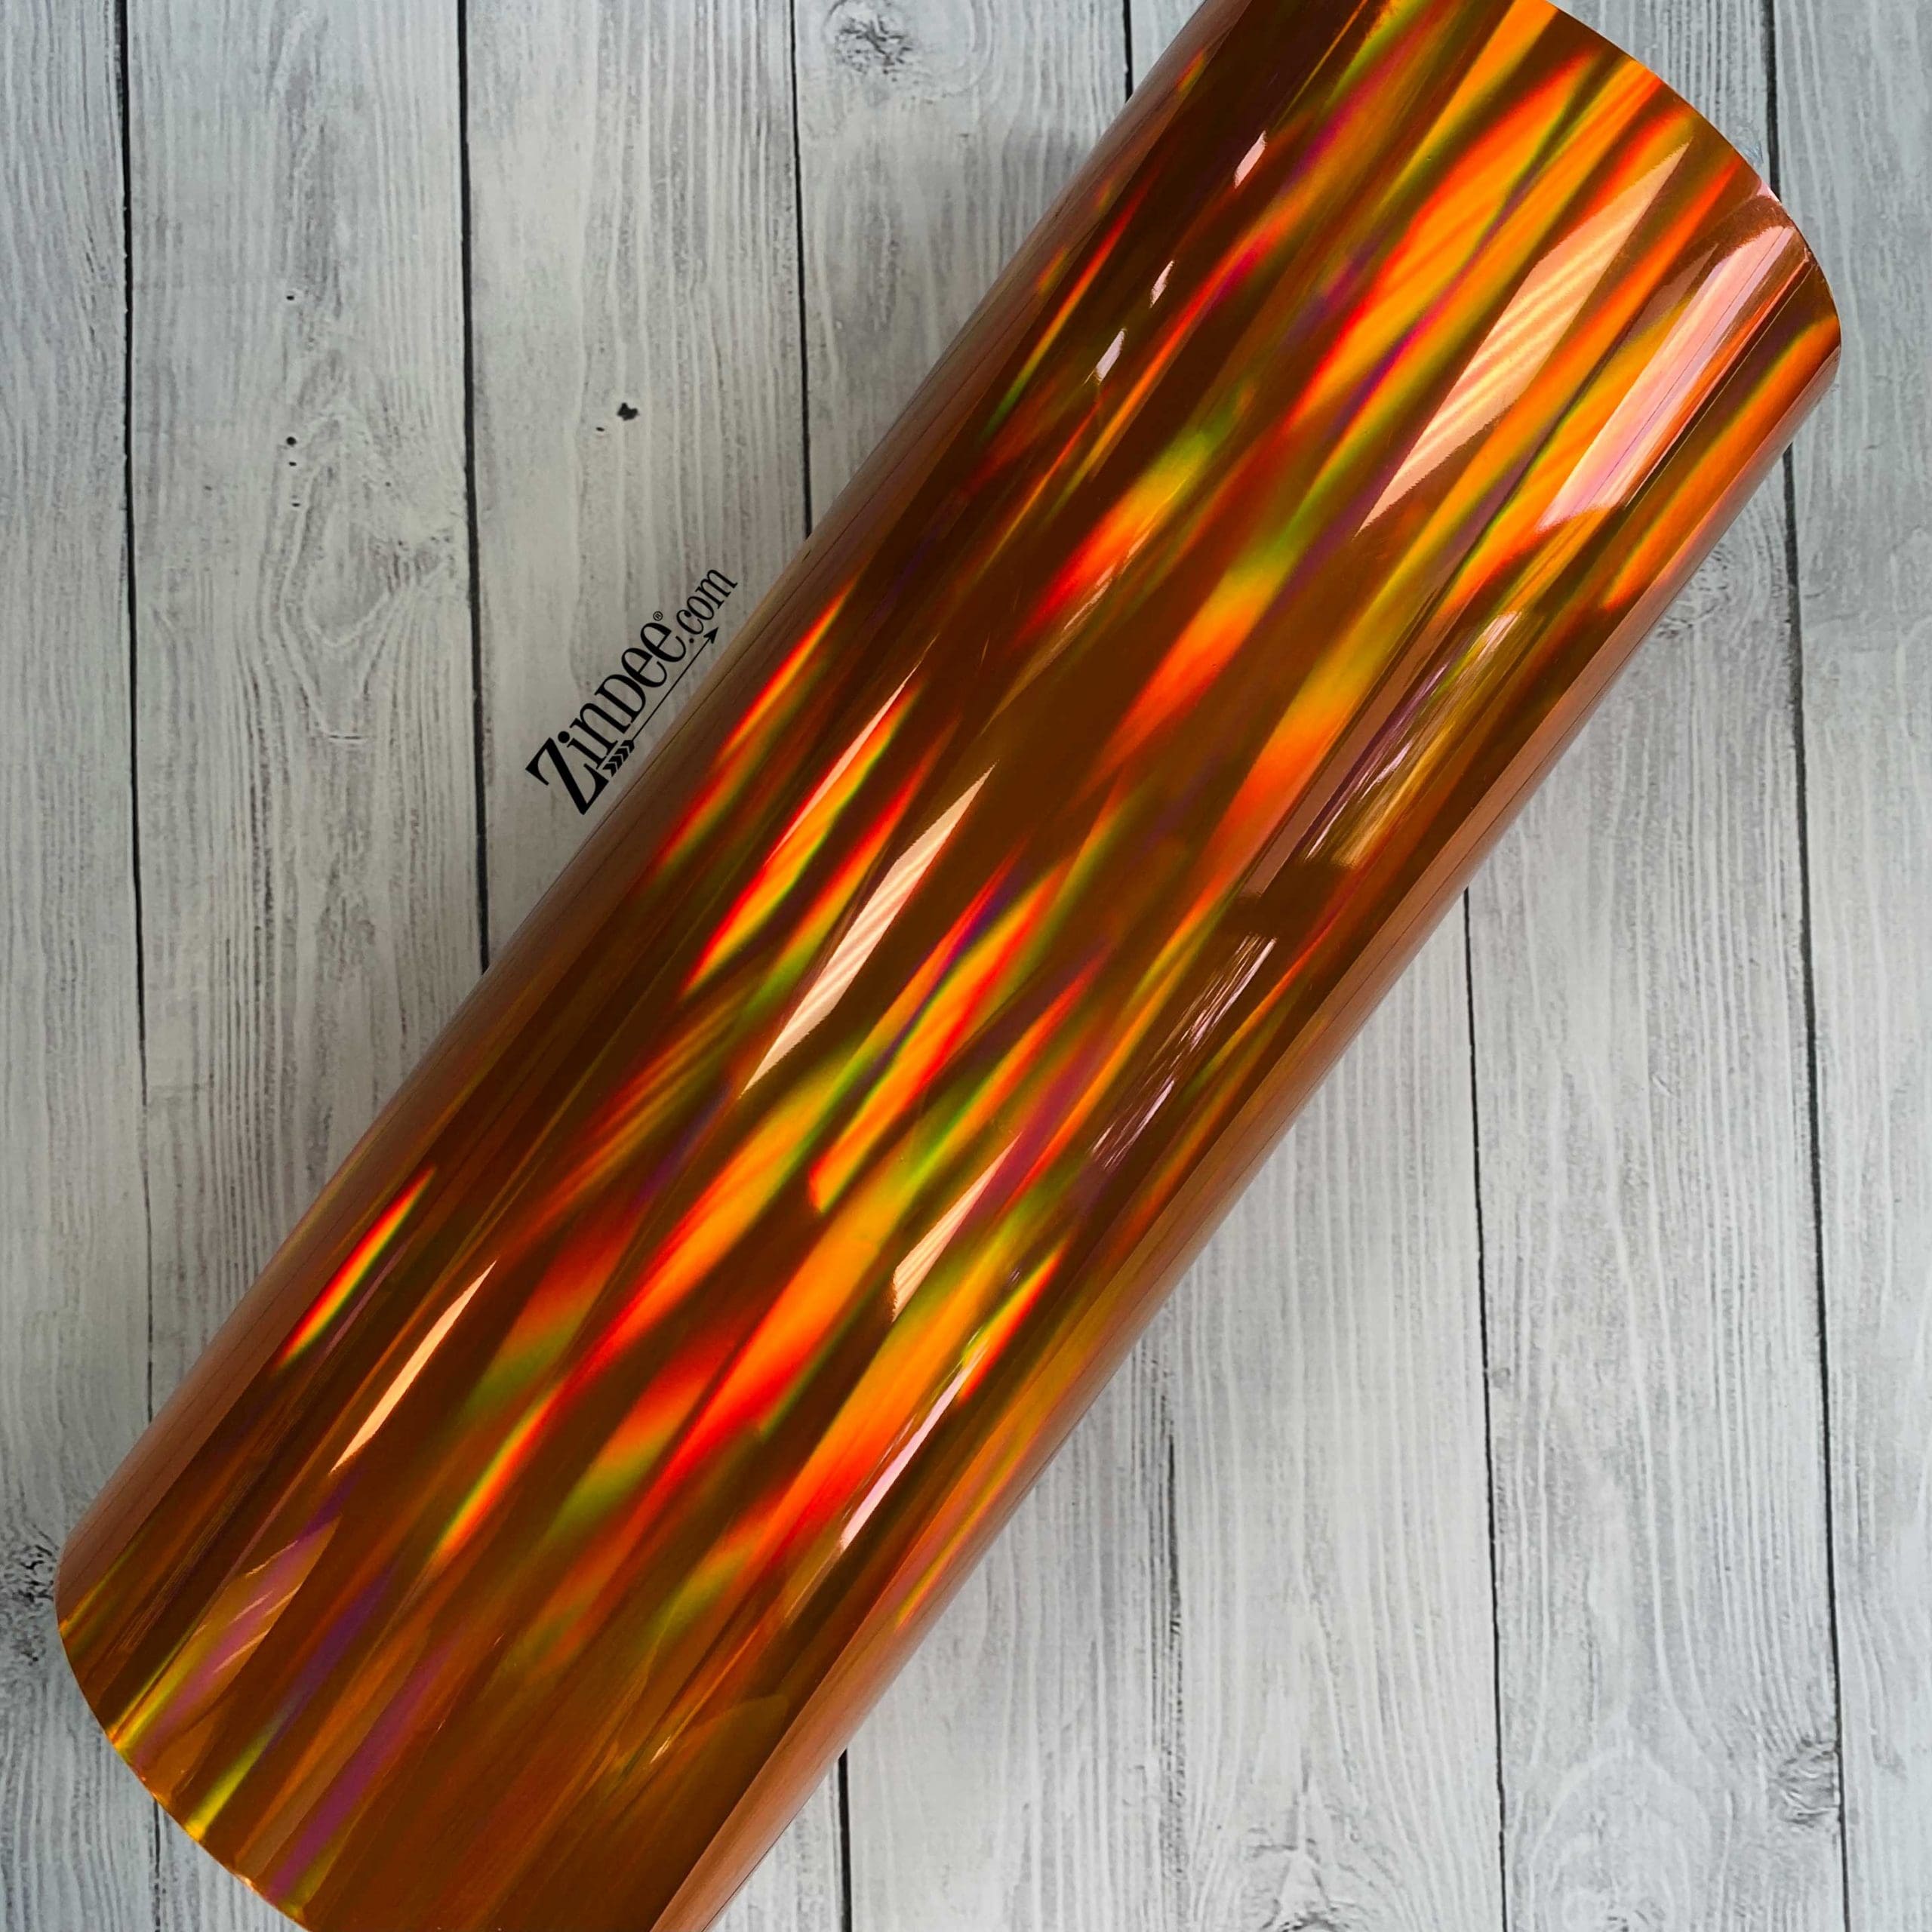 Orange Holographic Adhesive Vinyl Rolls By Craftables